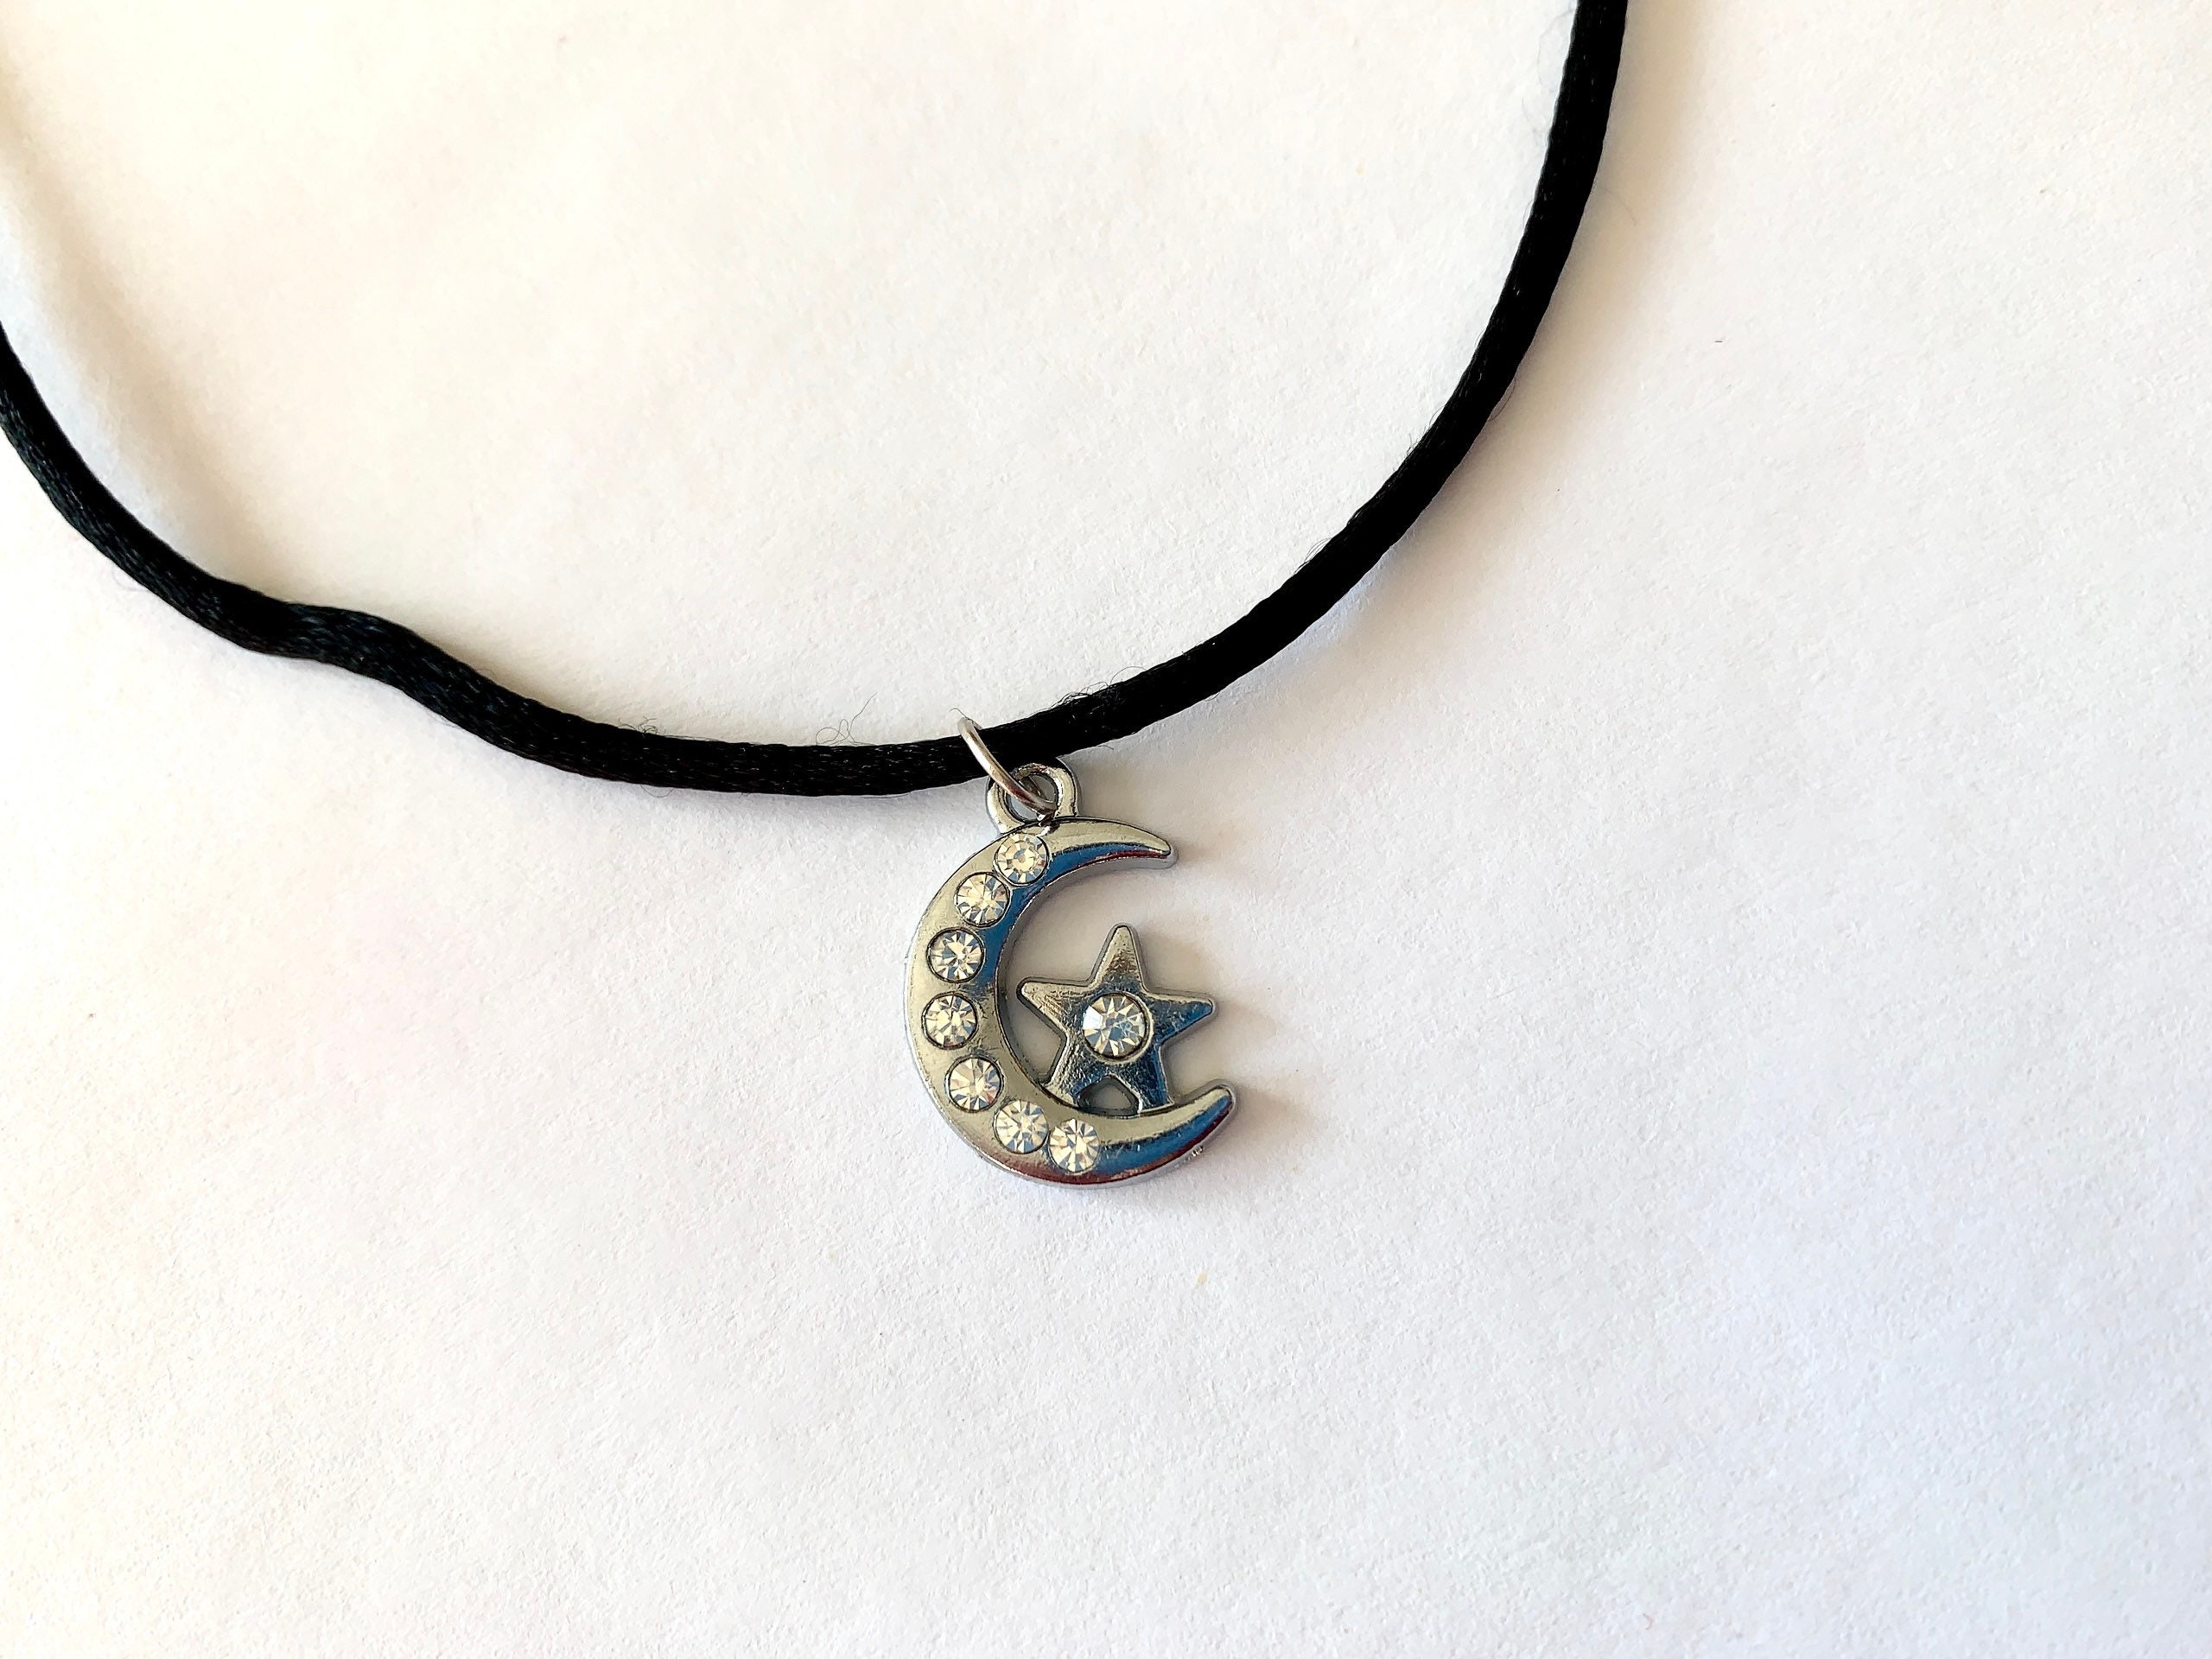 Half Moon Breakable Silver Necklace & Keychain - .999 Fine Silver